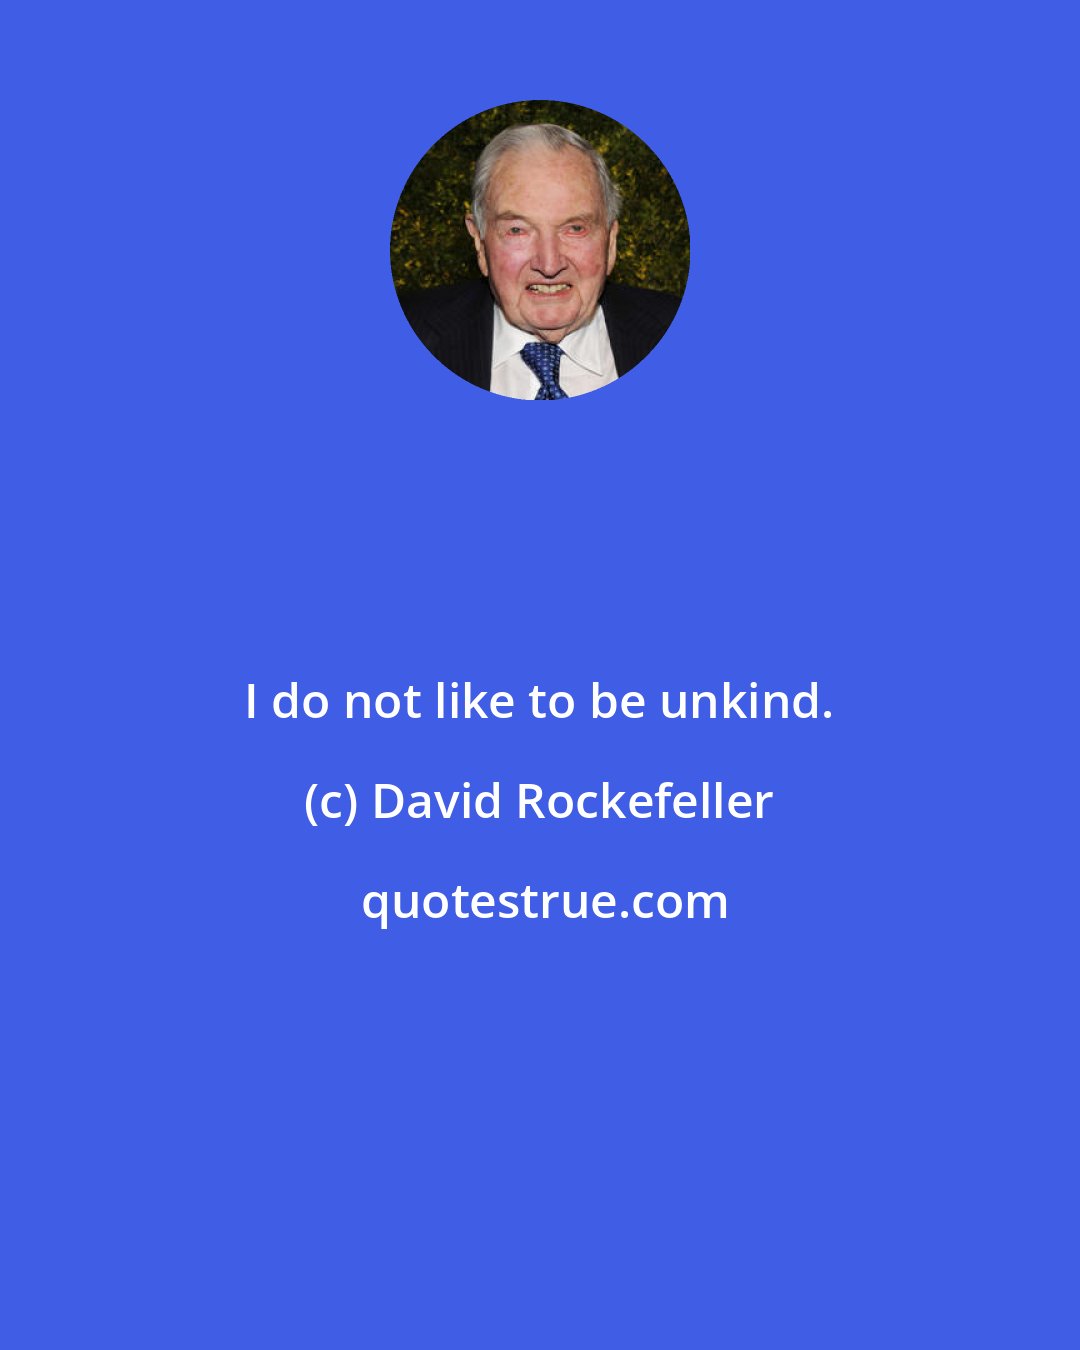 David Rockefeller: I do not like to be unkind.